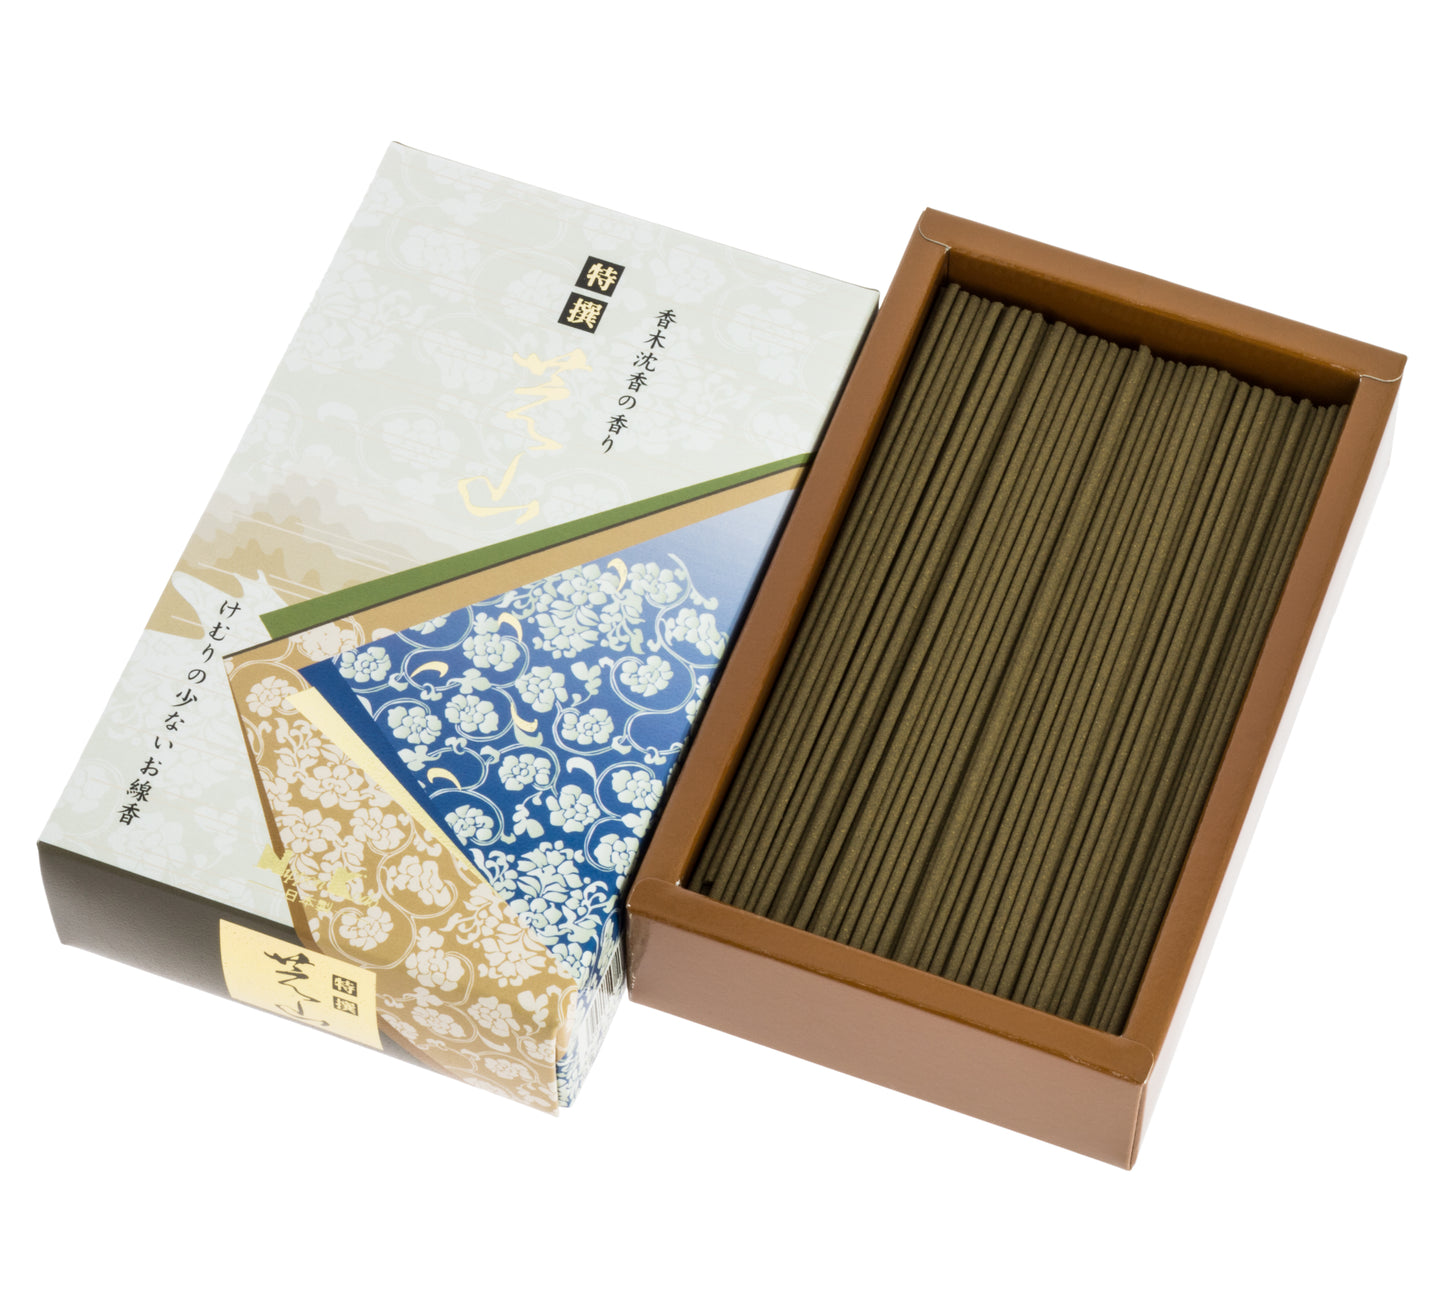 Tokusen Shibayama Incense - Large Box